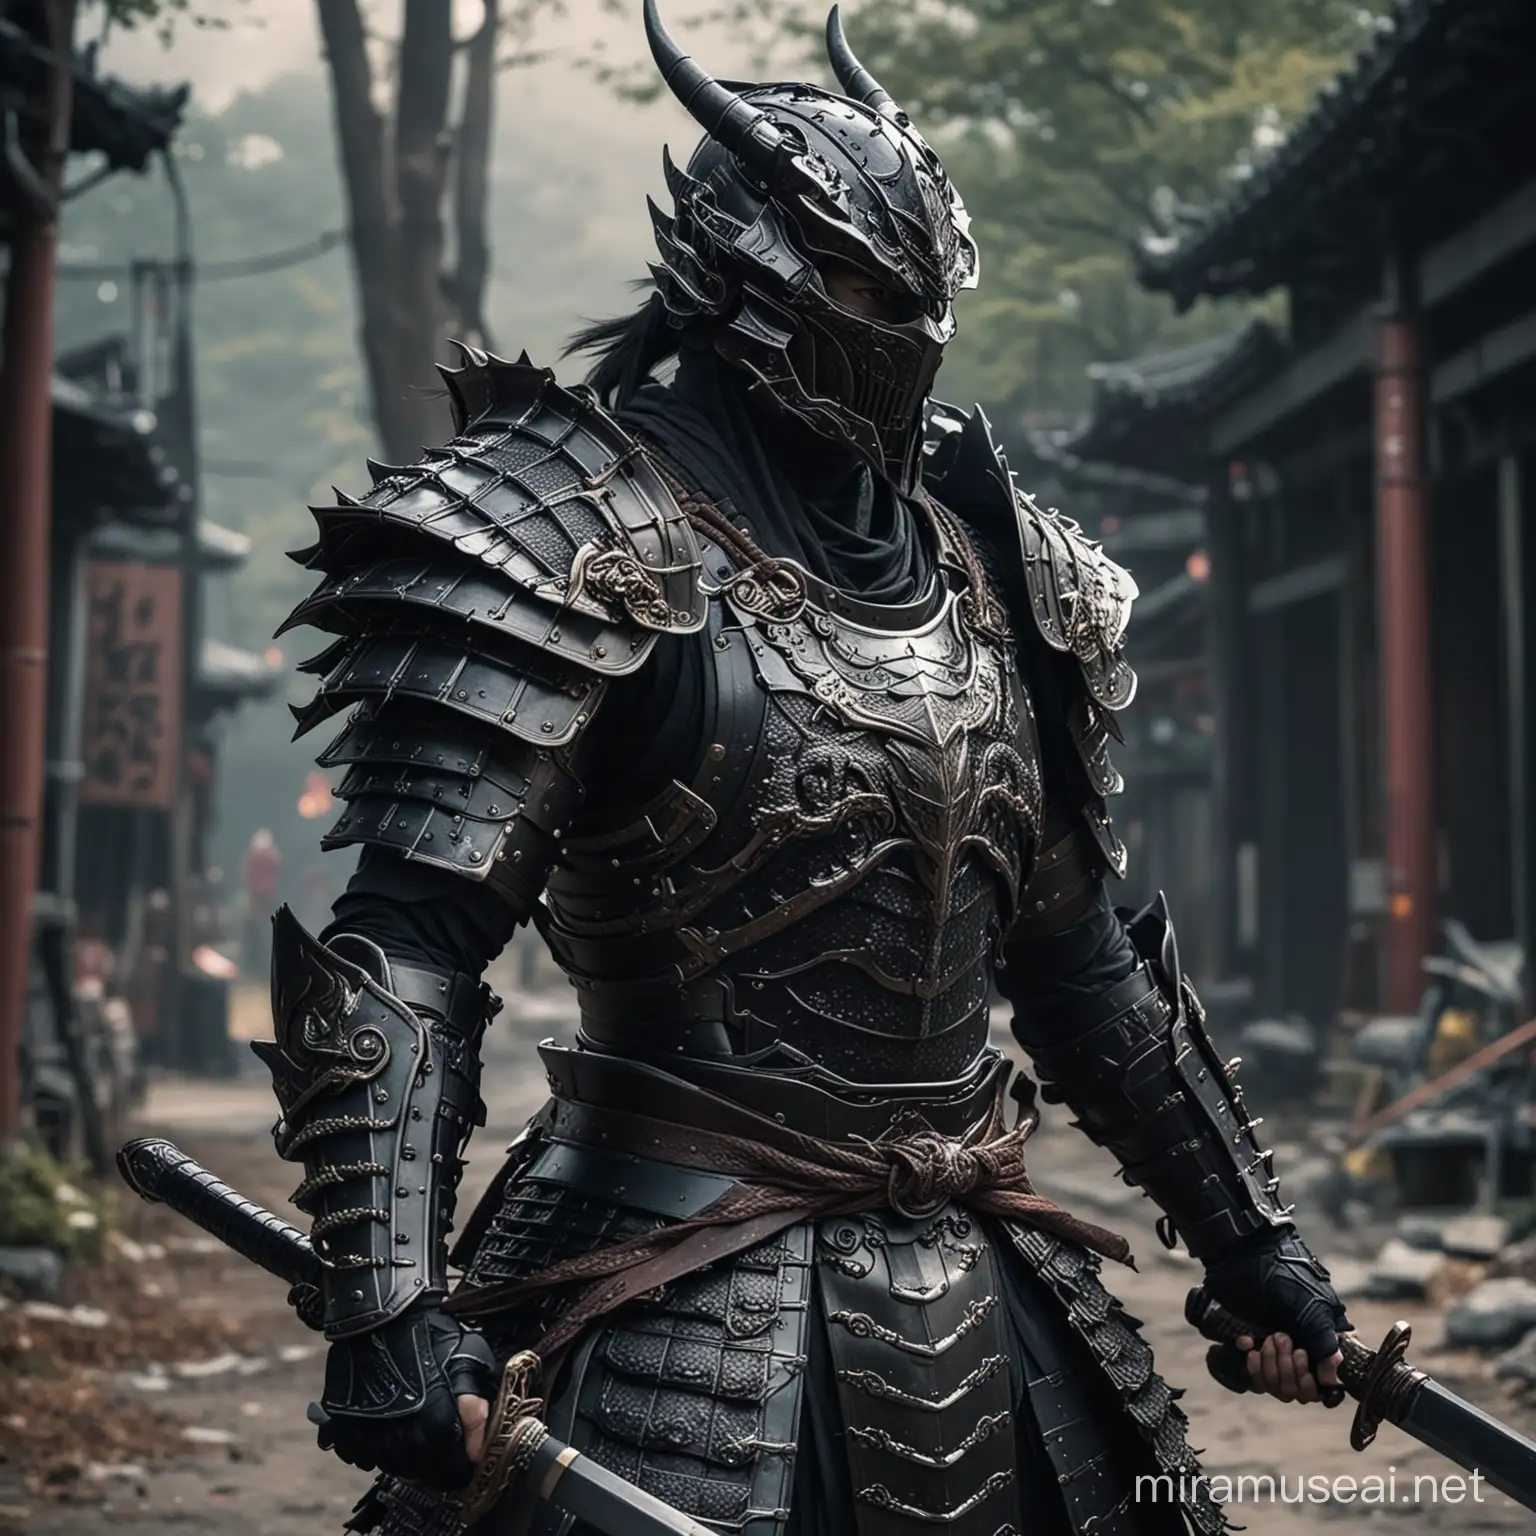 Epic Samurai Cyborg Battles Death Army in Cinematic Lighting